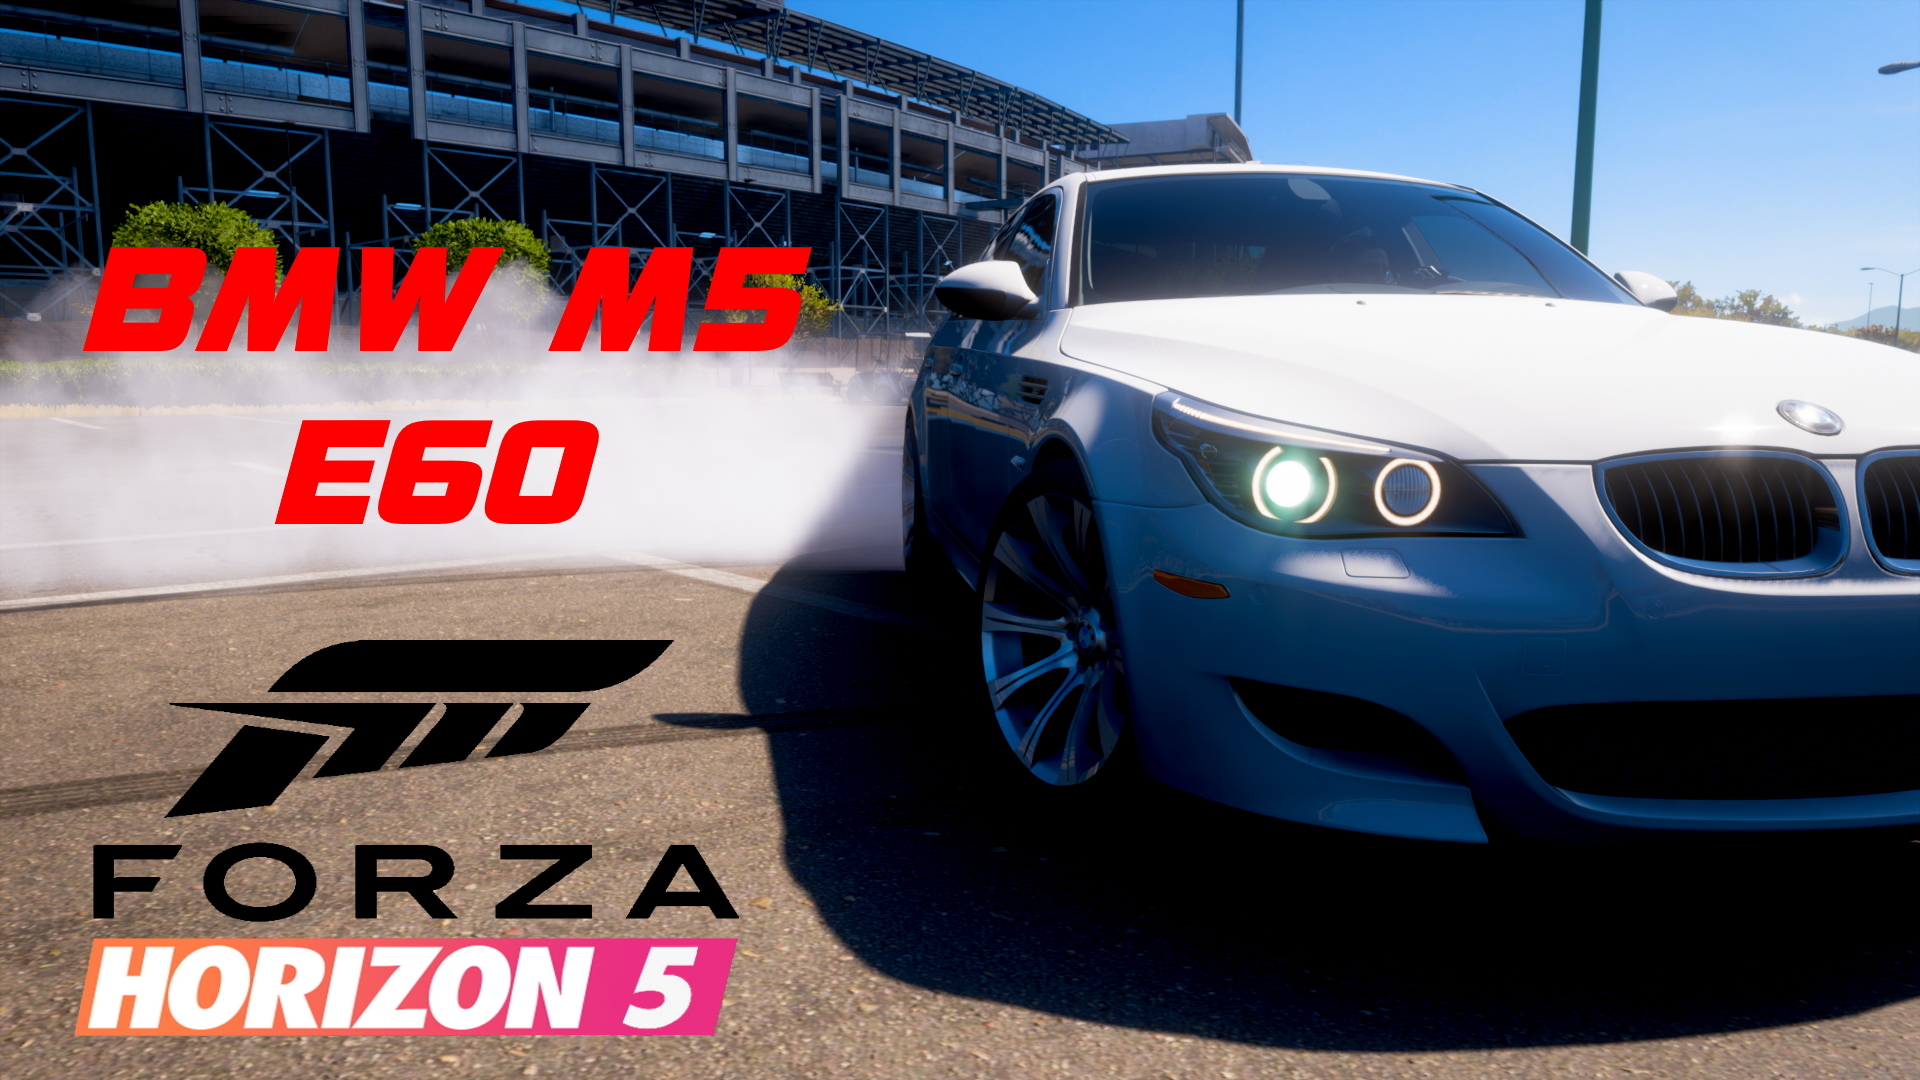 BMW M5 E60 Forza Horizon 5 Gamepad Defender X7.mp4